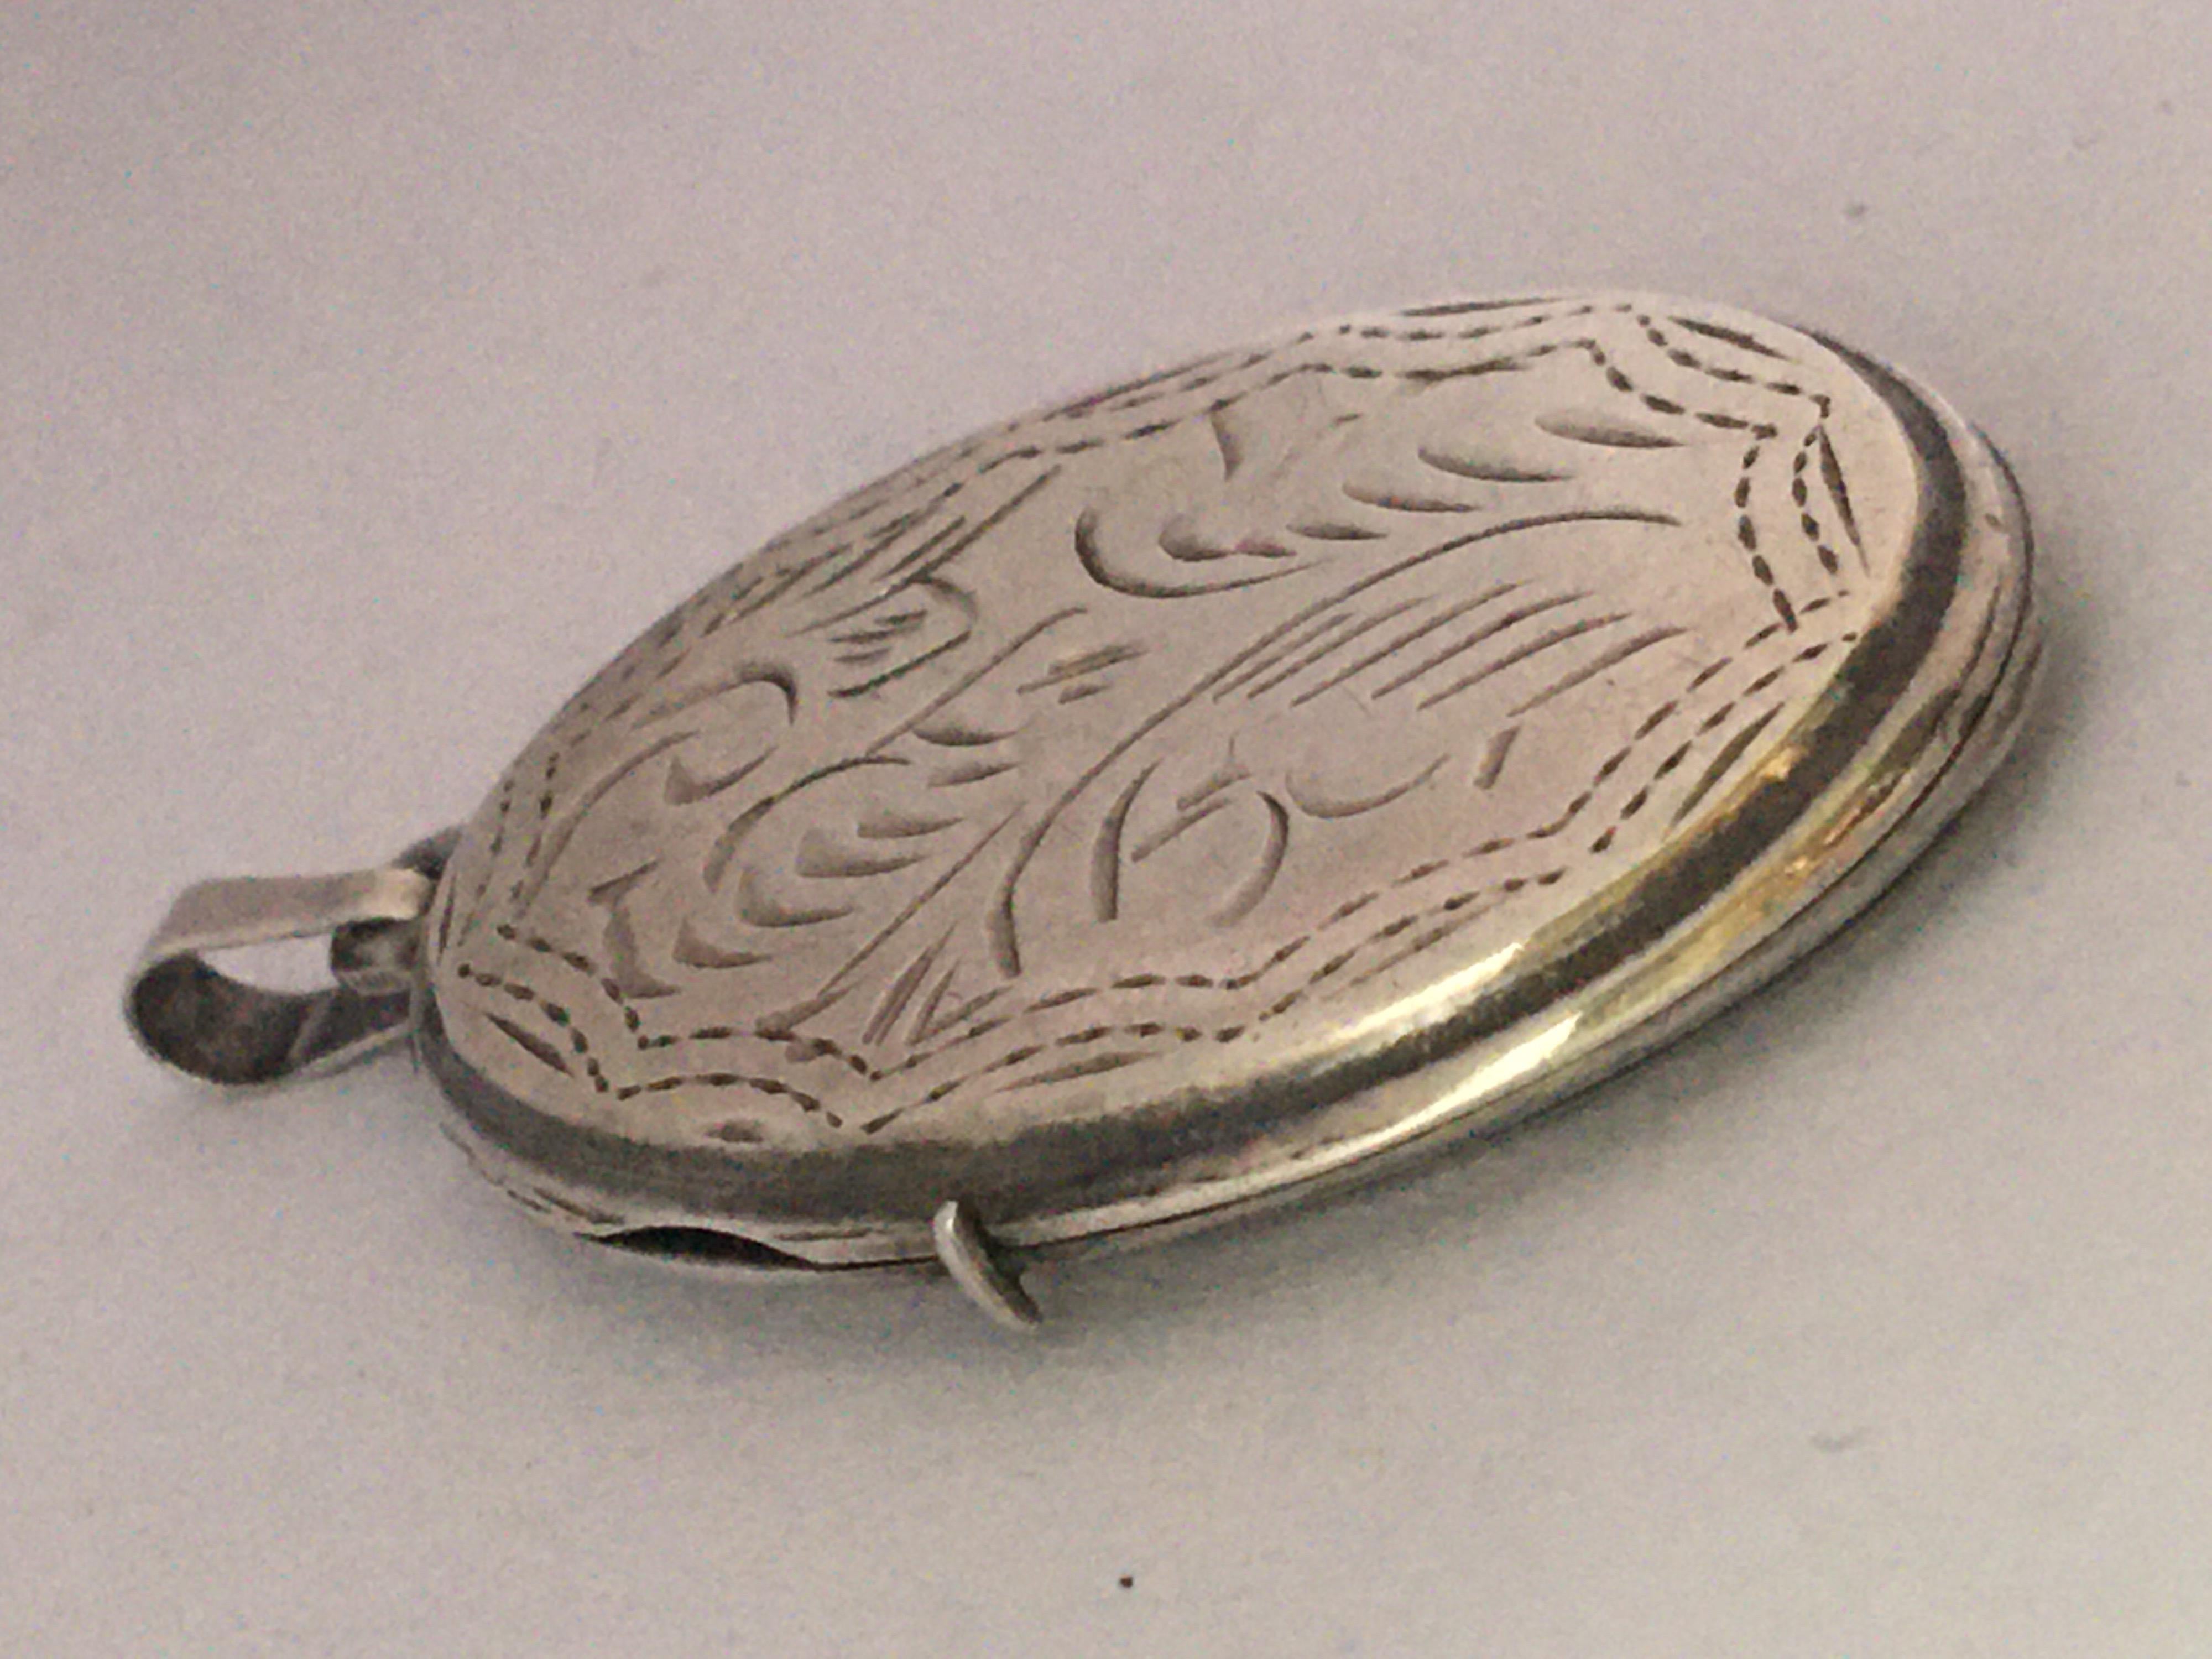 Antique Silver Engraved Oval Locket Pendant 1